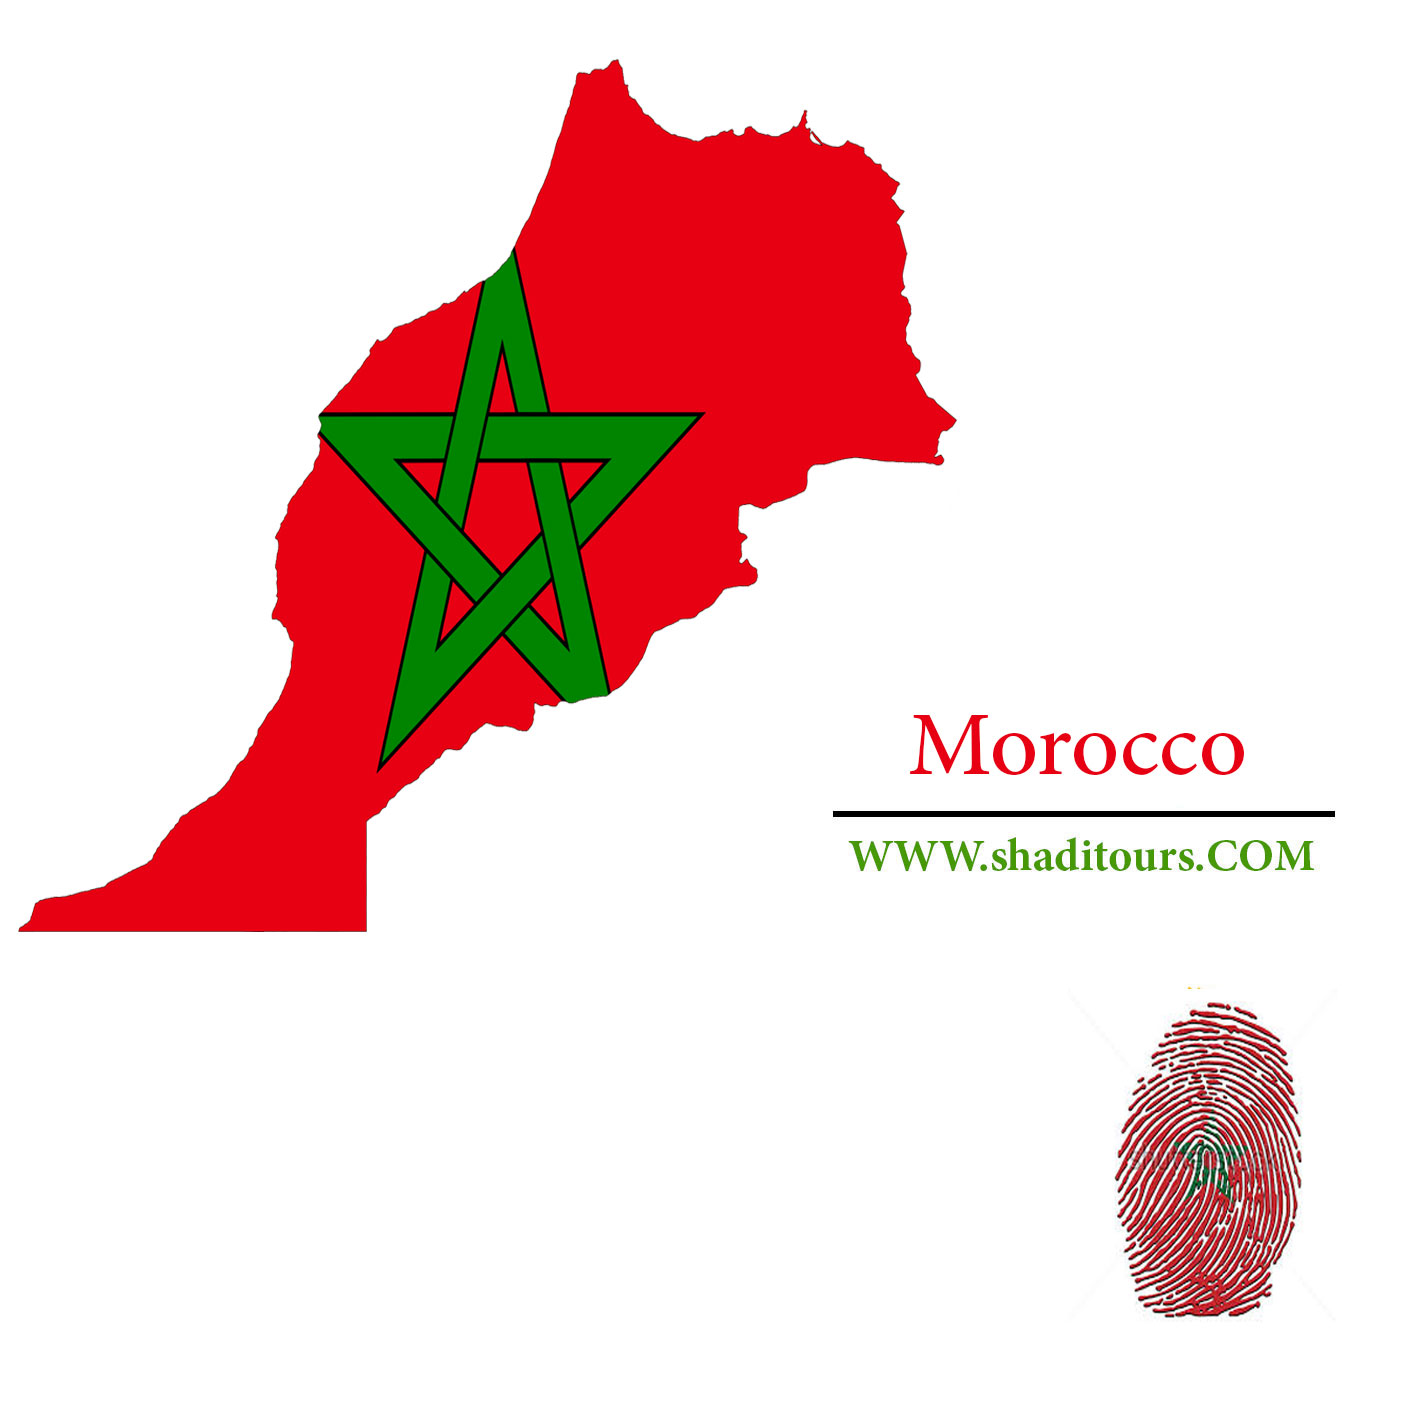 Morocco-shaditours